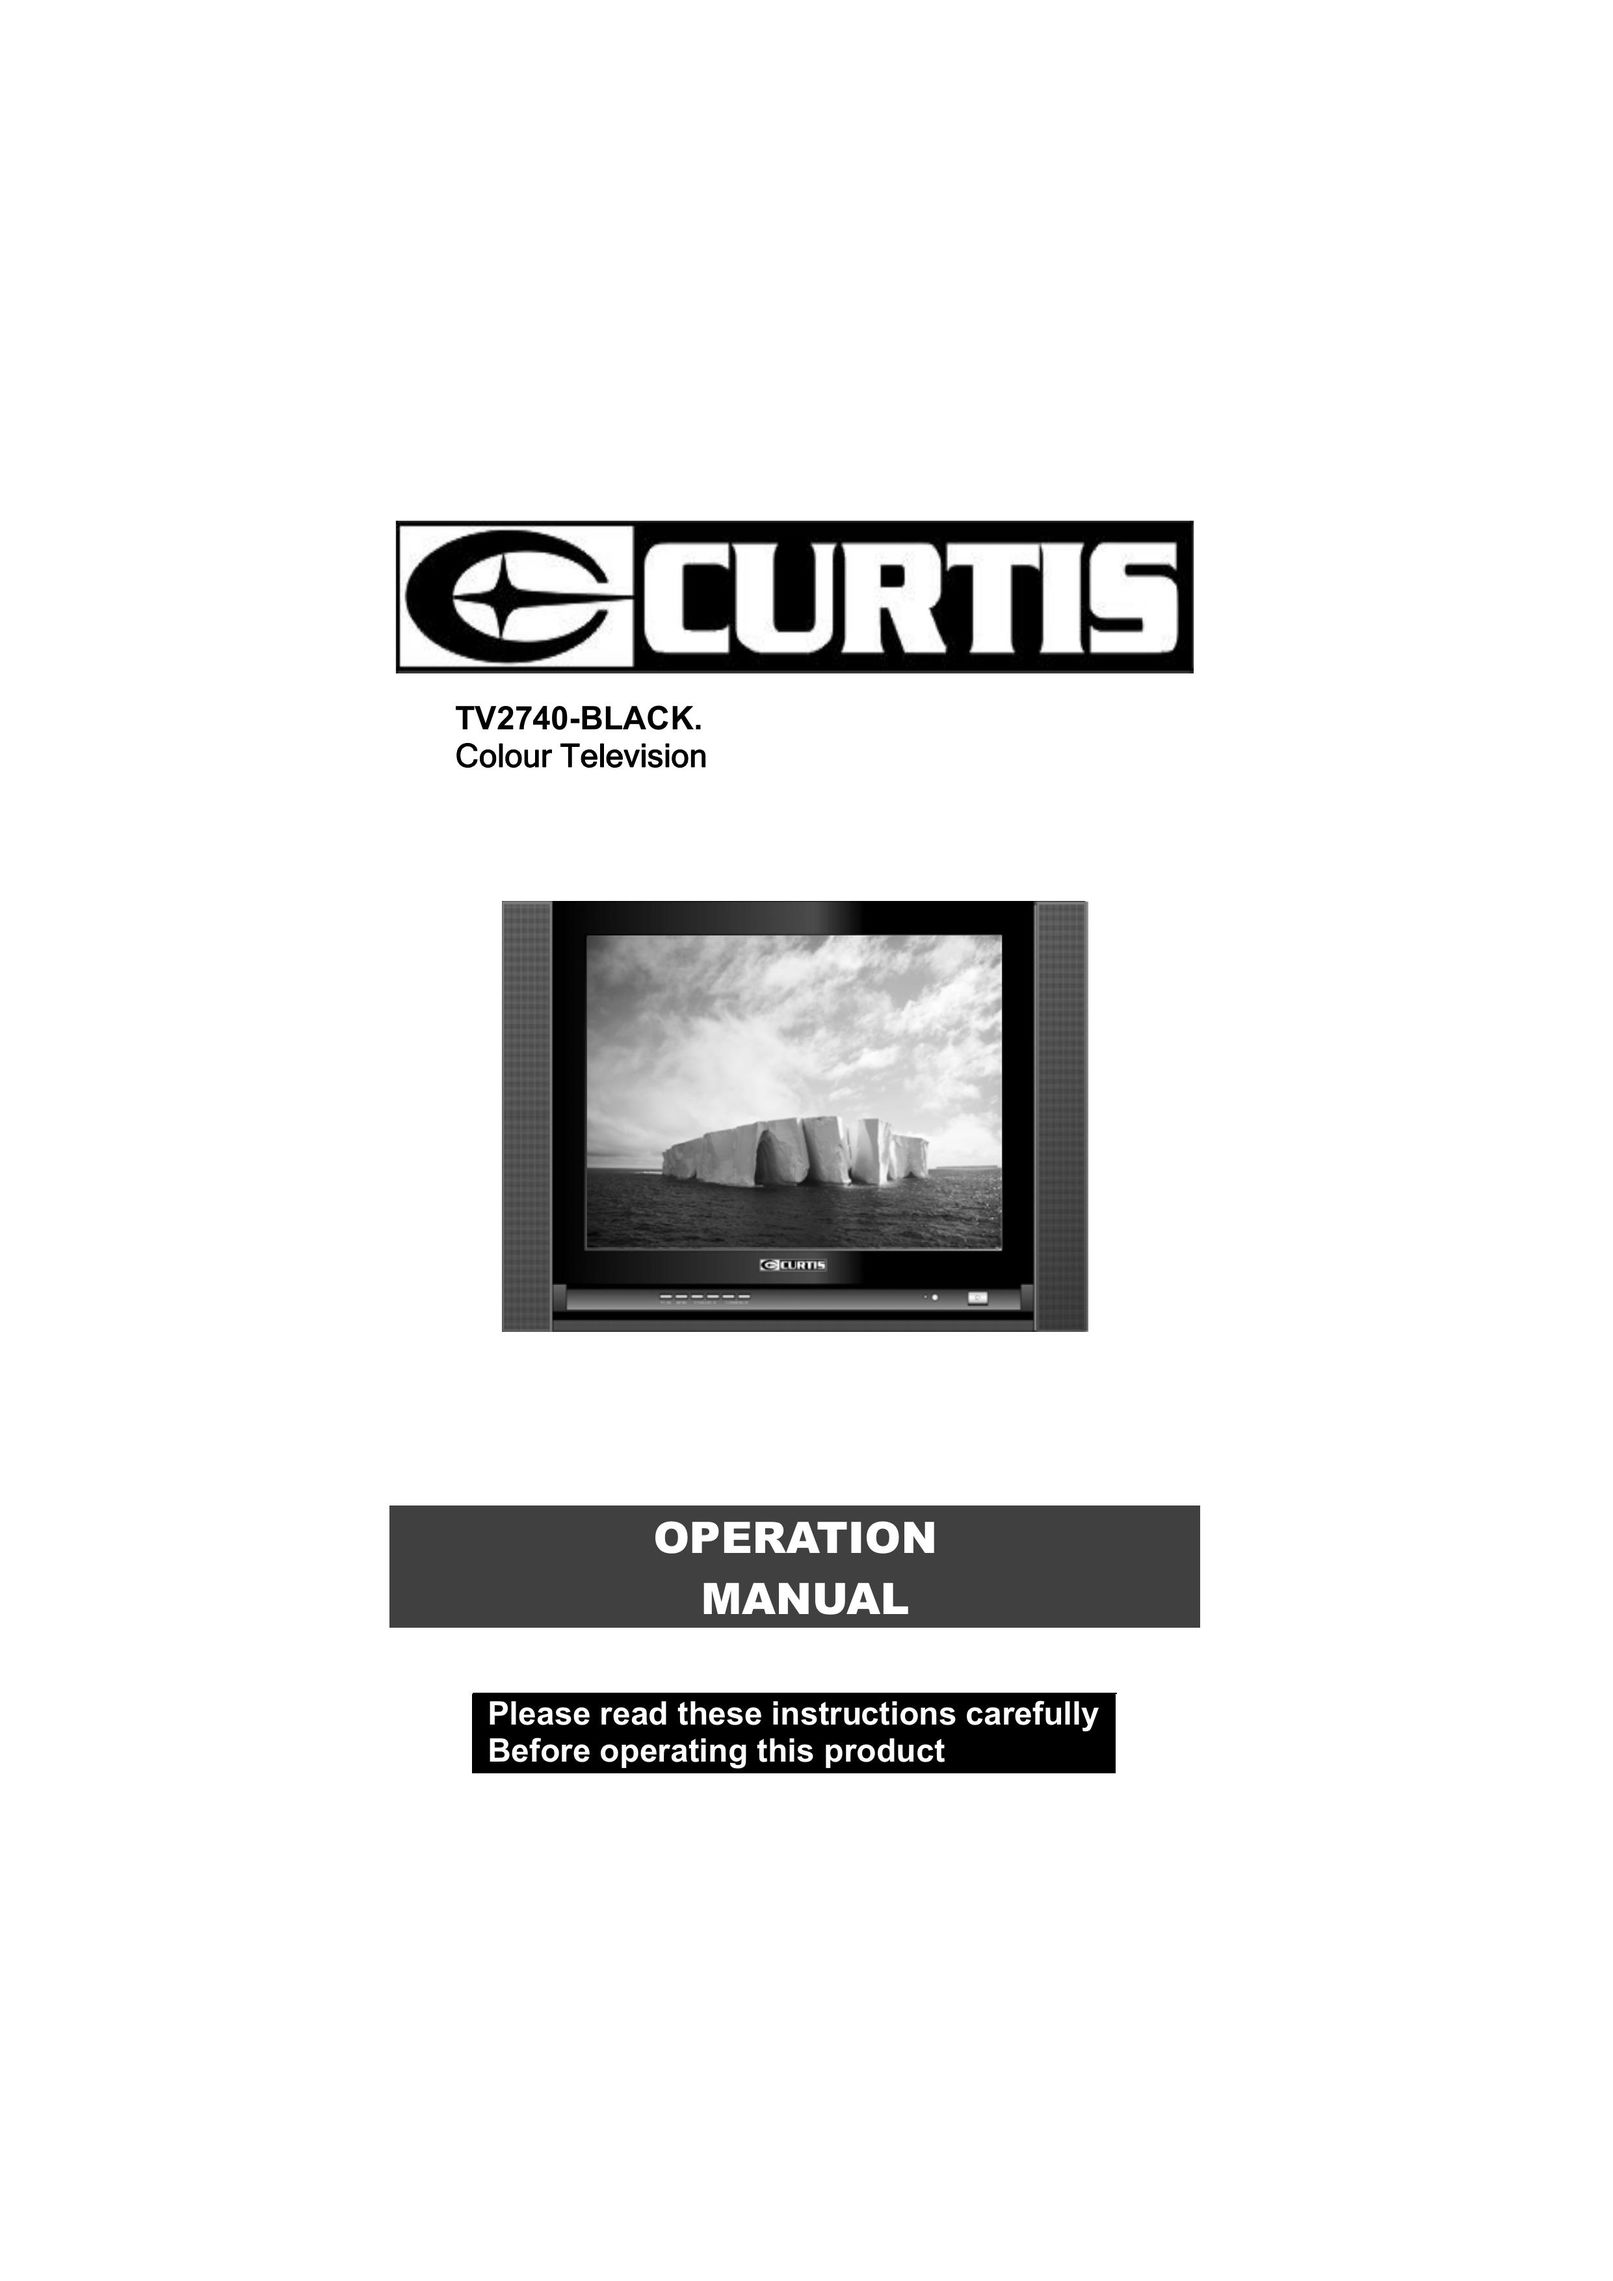 Curtis TV2740-Black CRT Television User Manual